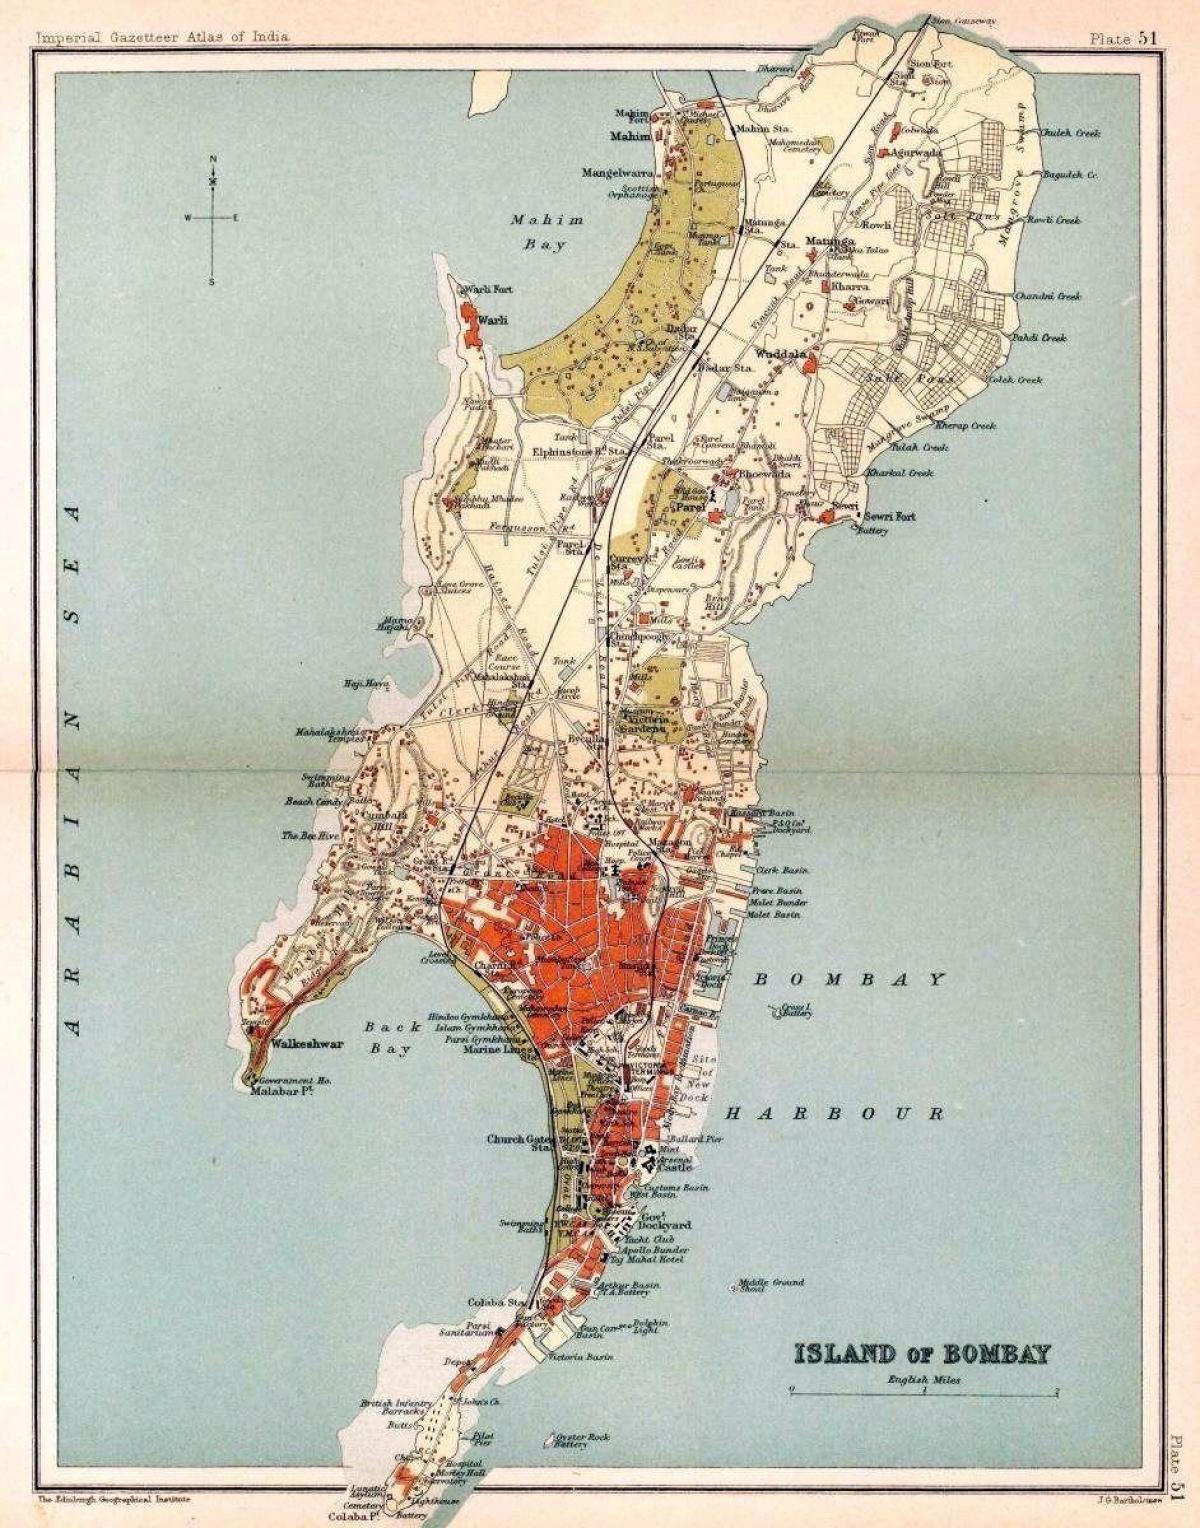 Mumbai - Bombay historical map